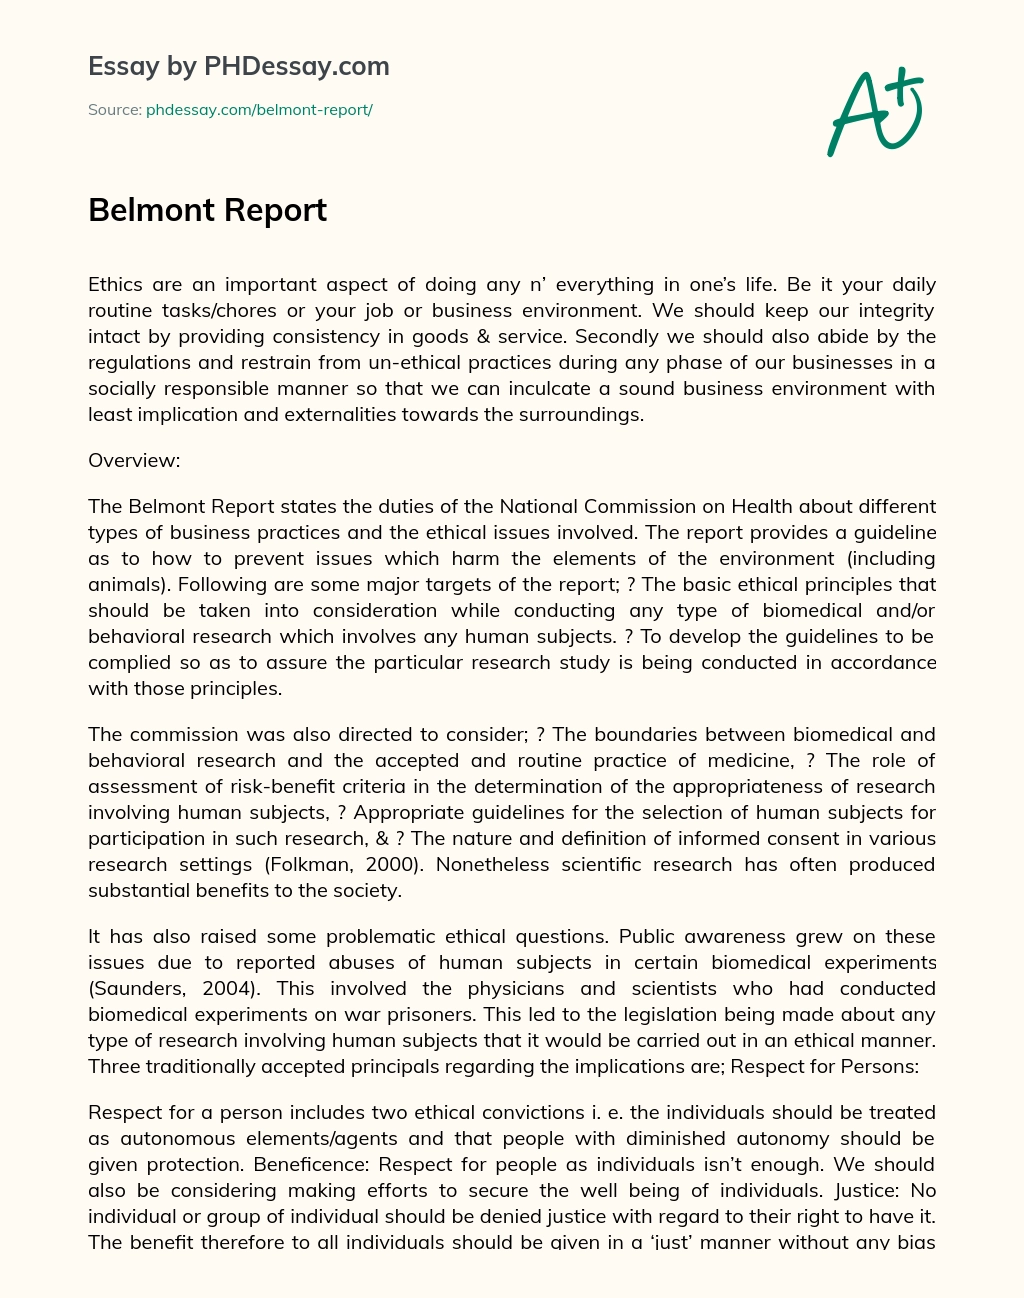 Belmont Report essay